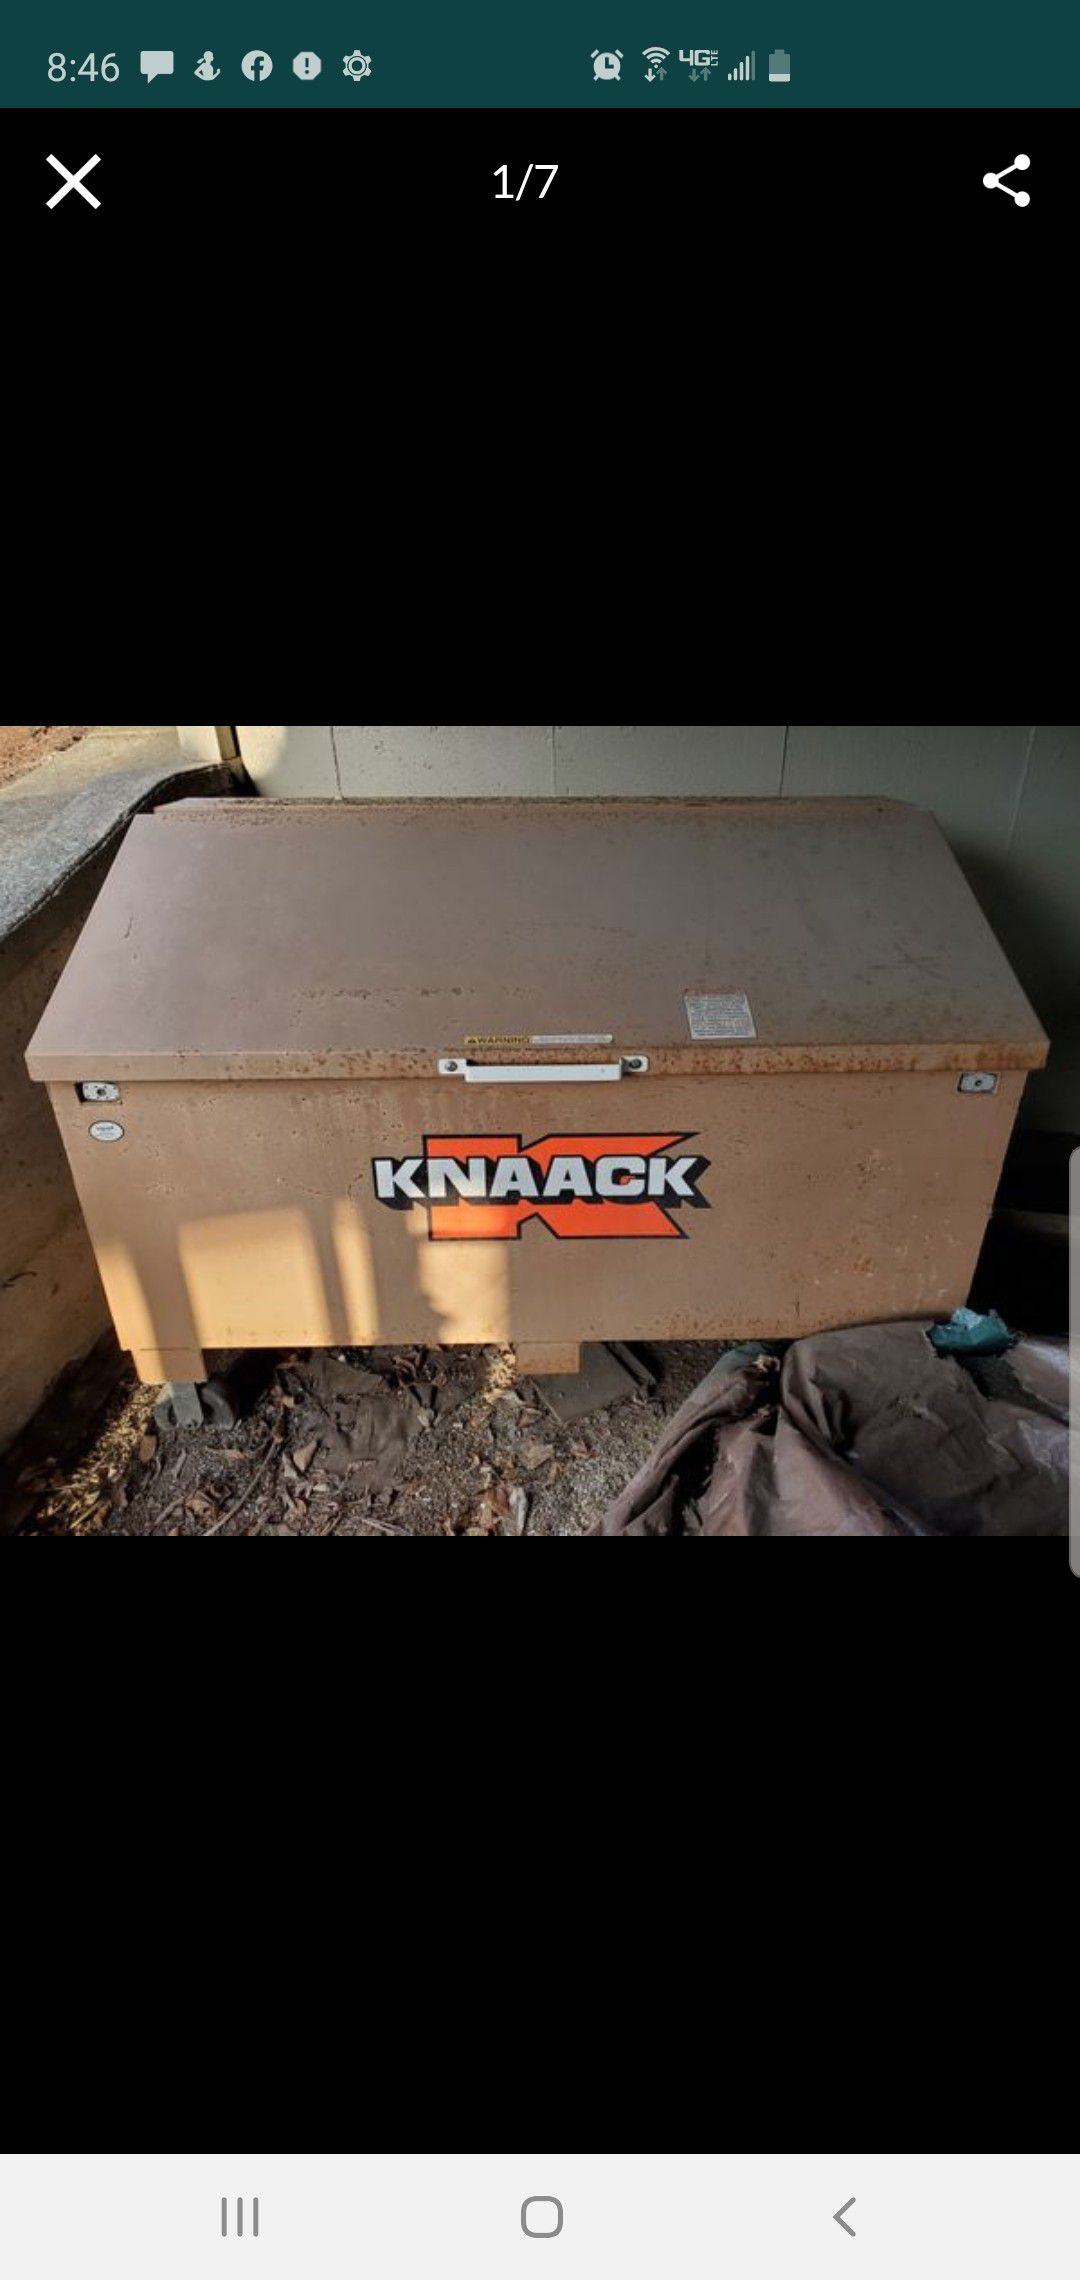 Knaack 3068 xlg rolling job tool box on wheels...60" wide, 40" tall, 32" deep